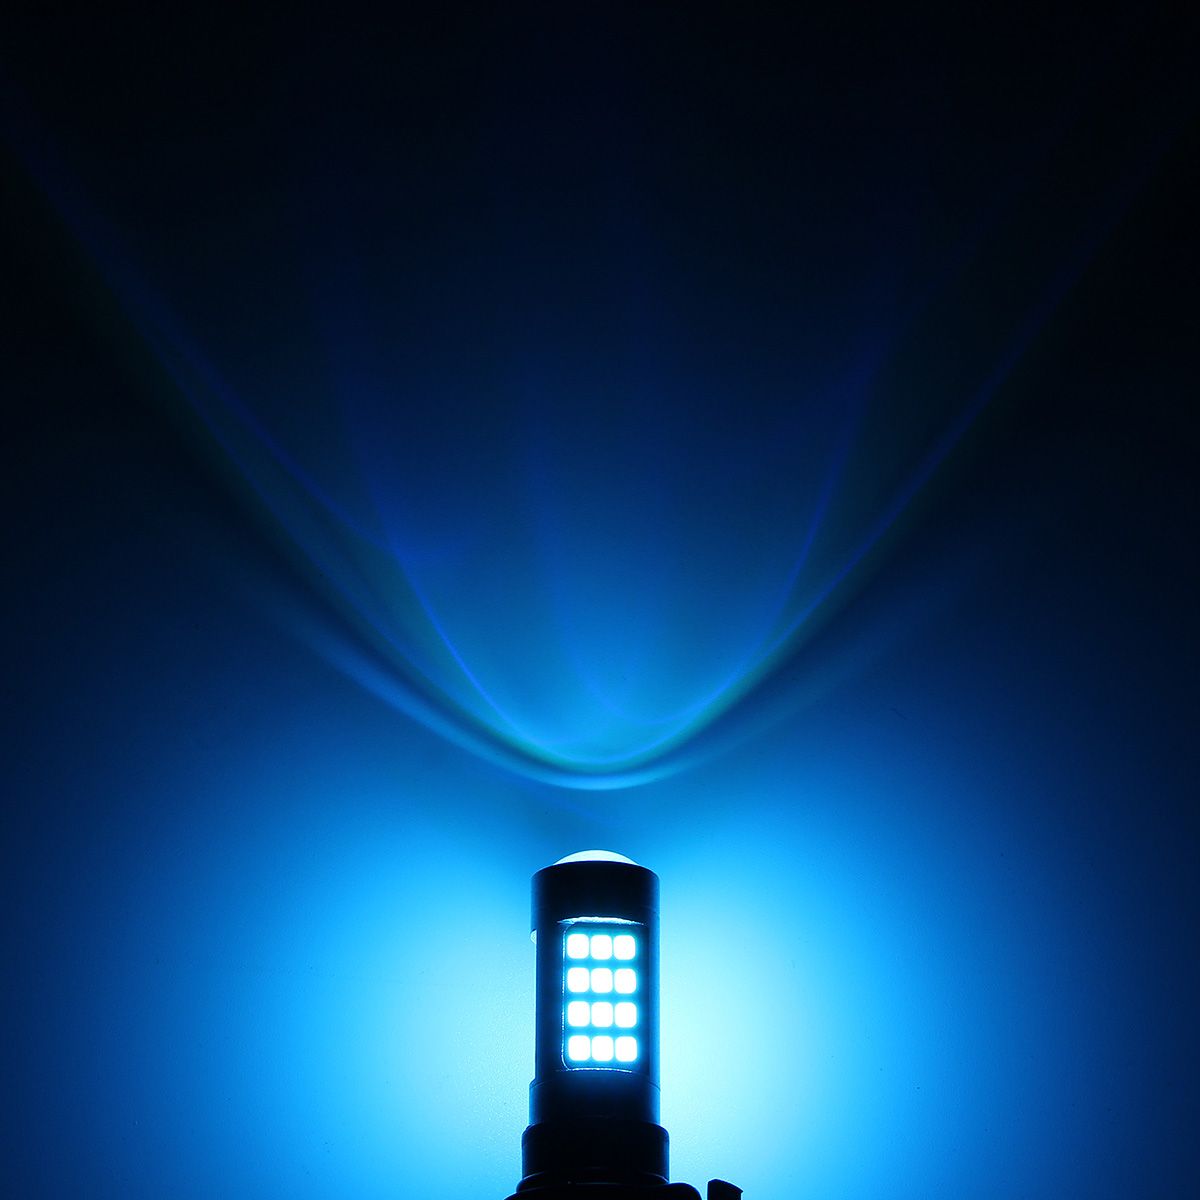 5202-2835-2323-H16-24W-750LM-BlueWhite-42-SMD-LED-Car-Fog-Lights-Bulb-with-Lens-1136473